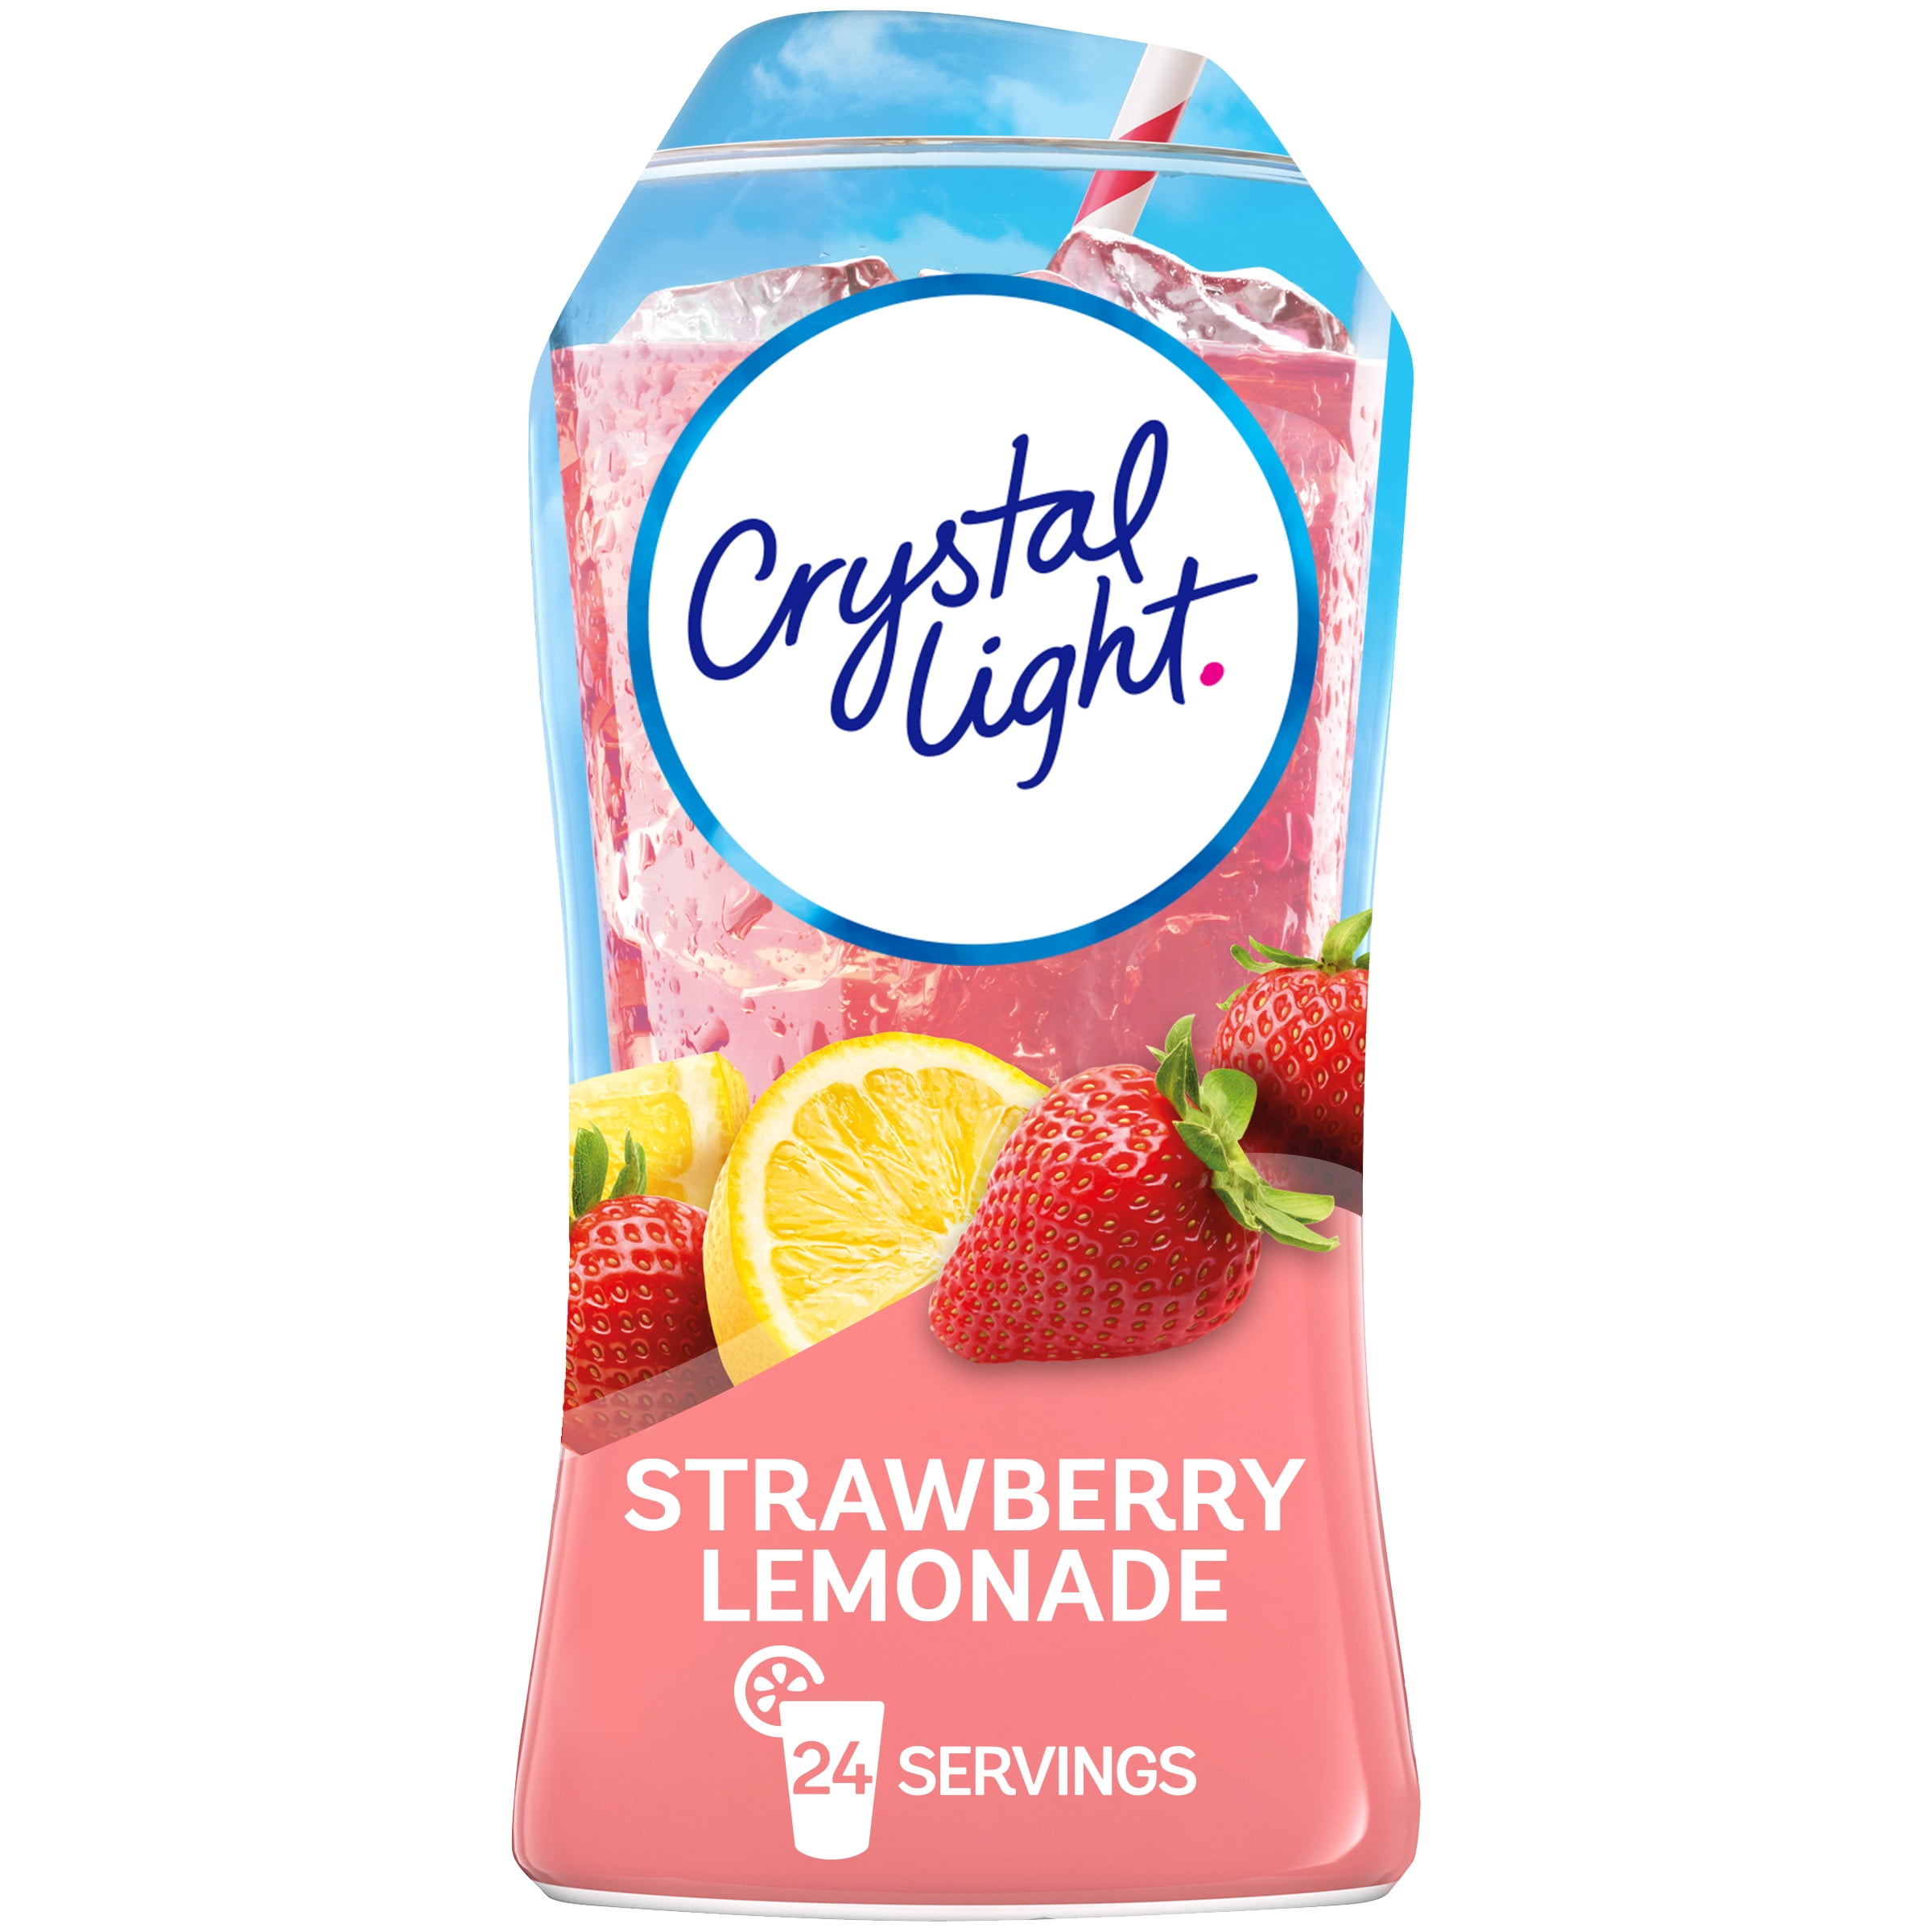 skratch LABS Strawberry Lemonade Sport Hydration Drink Mix, 15.5 oz - City  Market